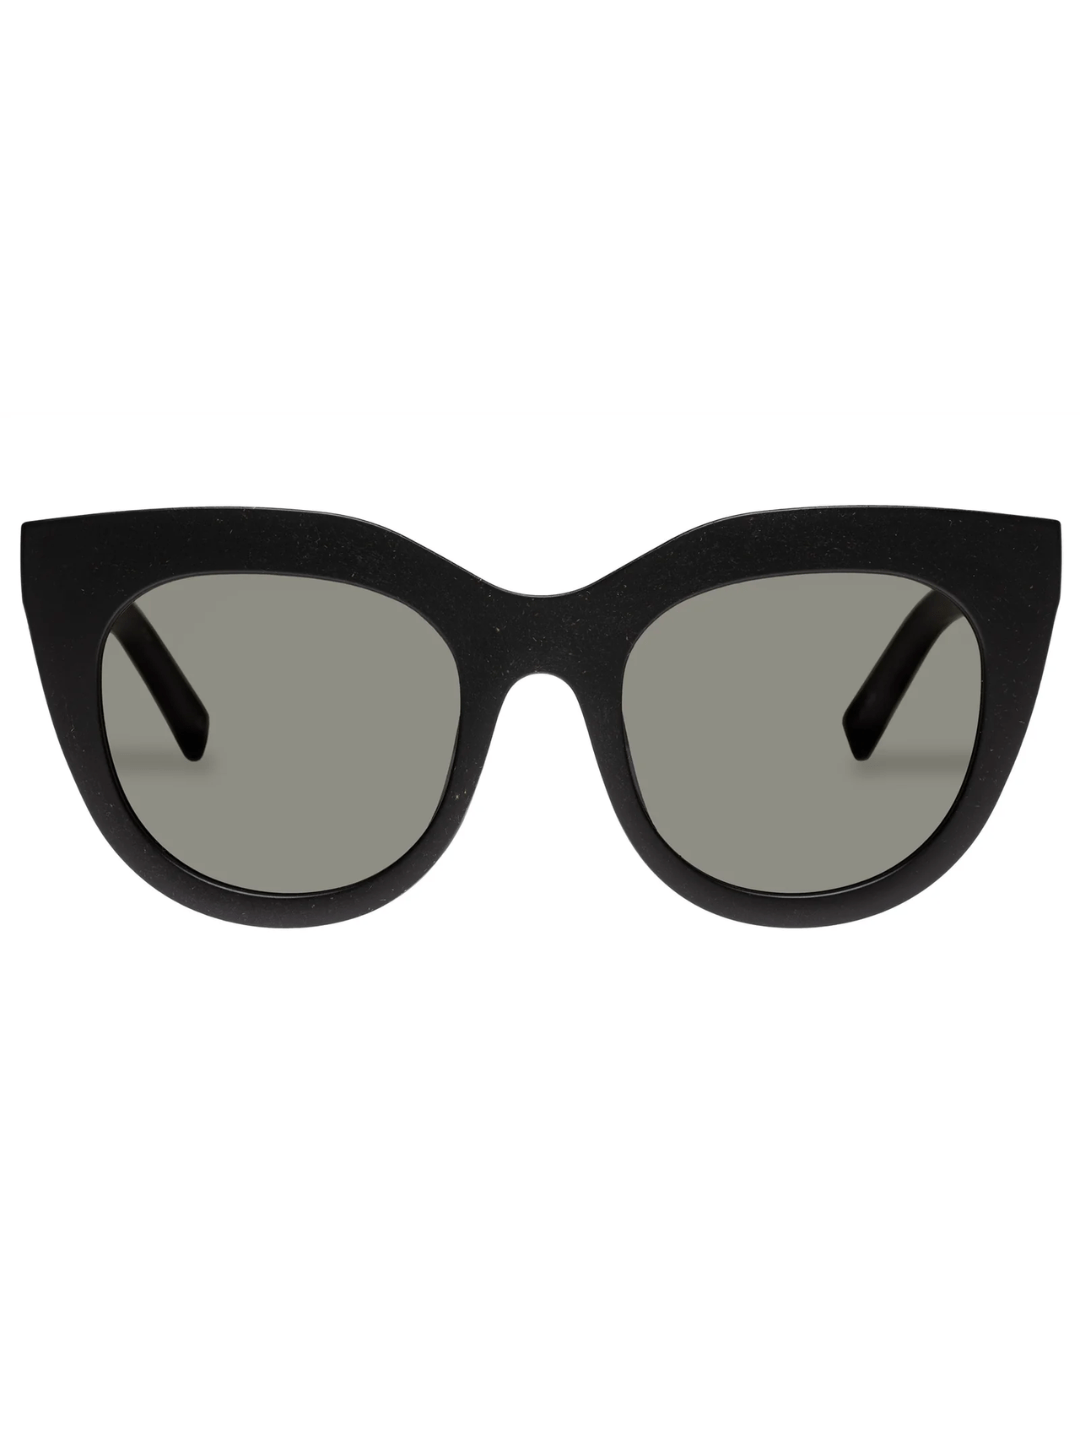 Le Specs Sunglasses Air Grass in Black Grass